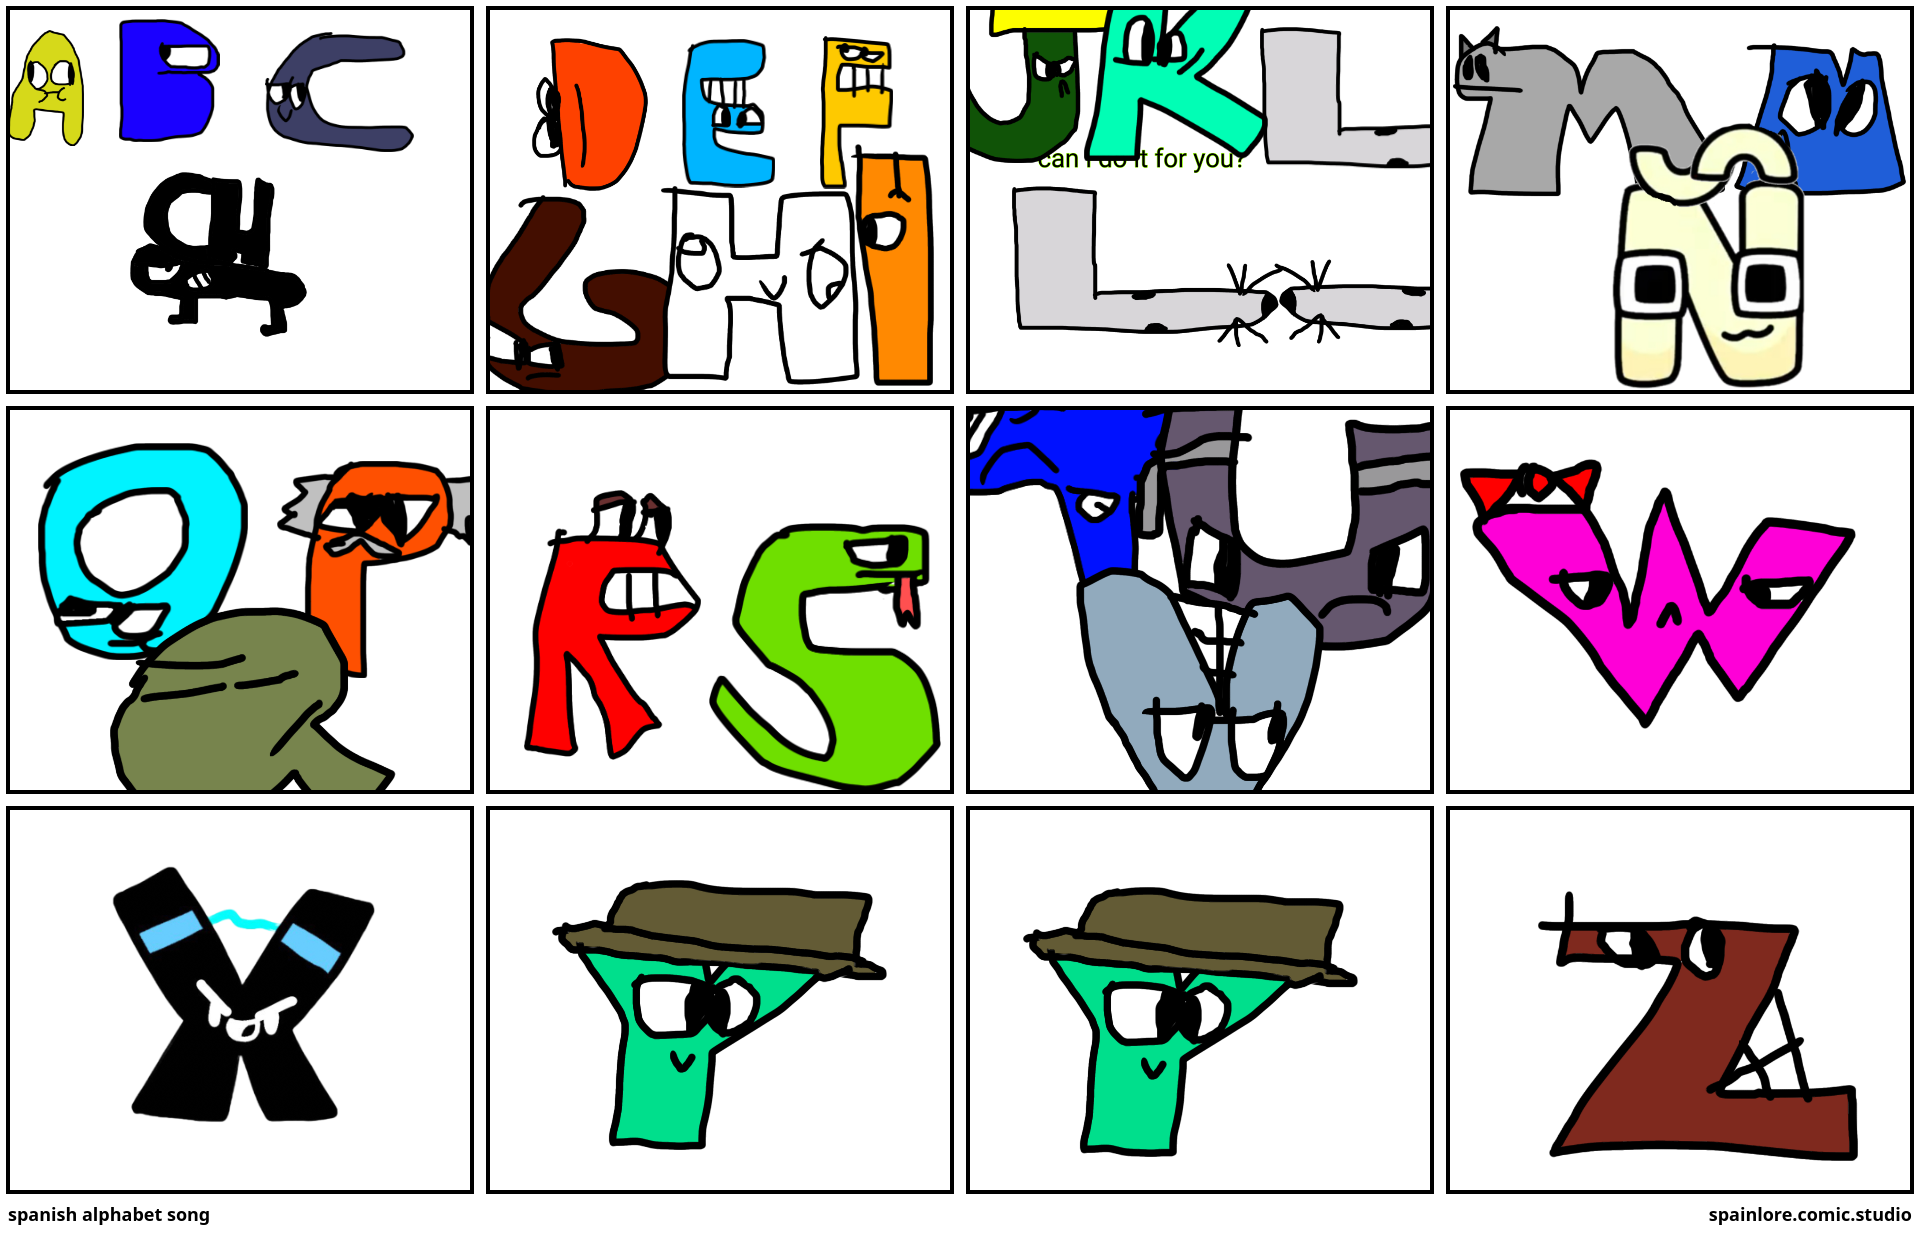 I made my own Spanish Alphabet Lore! (For HKtito) - Comic Studio